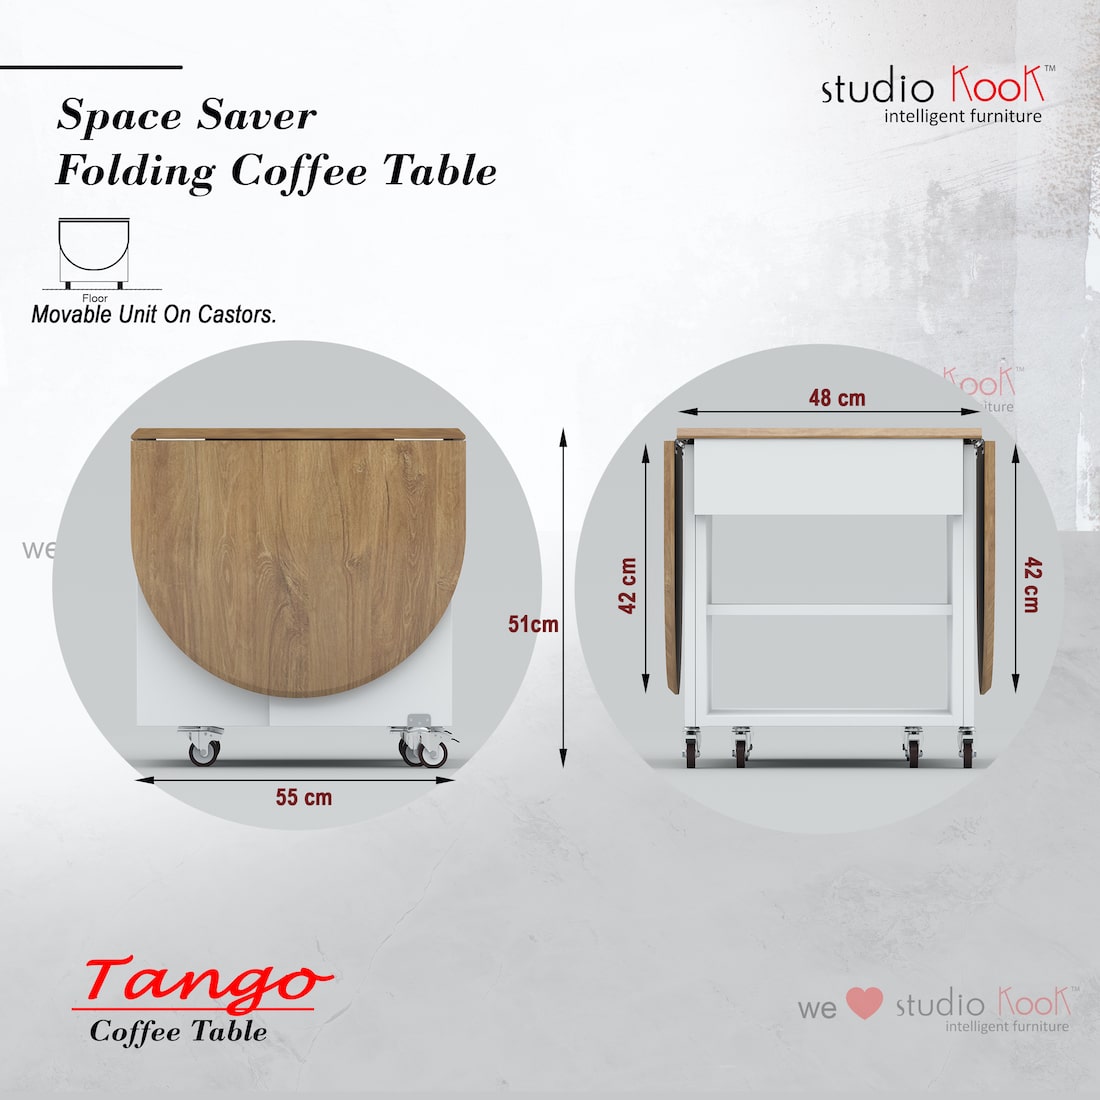 Tango Folding Coffee Table (Moonshine White Finish)